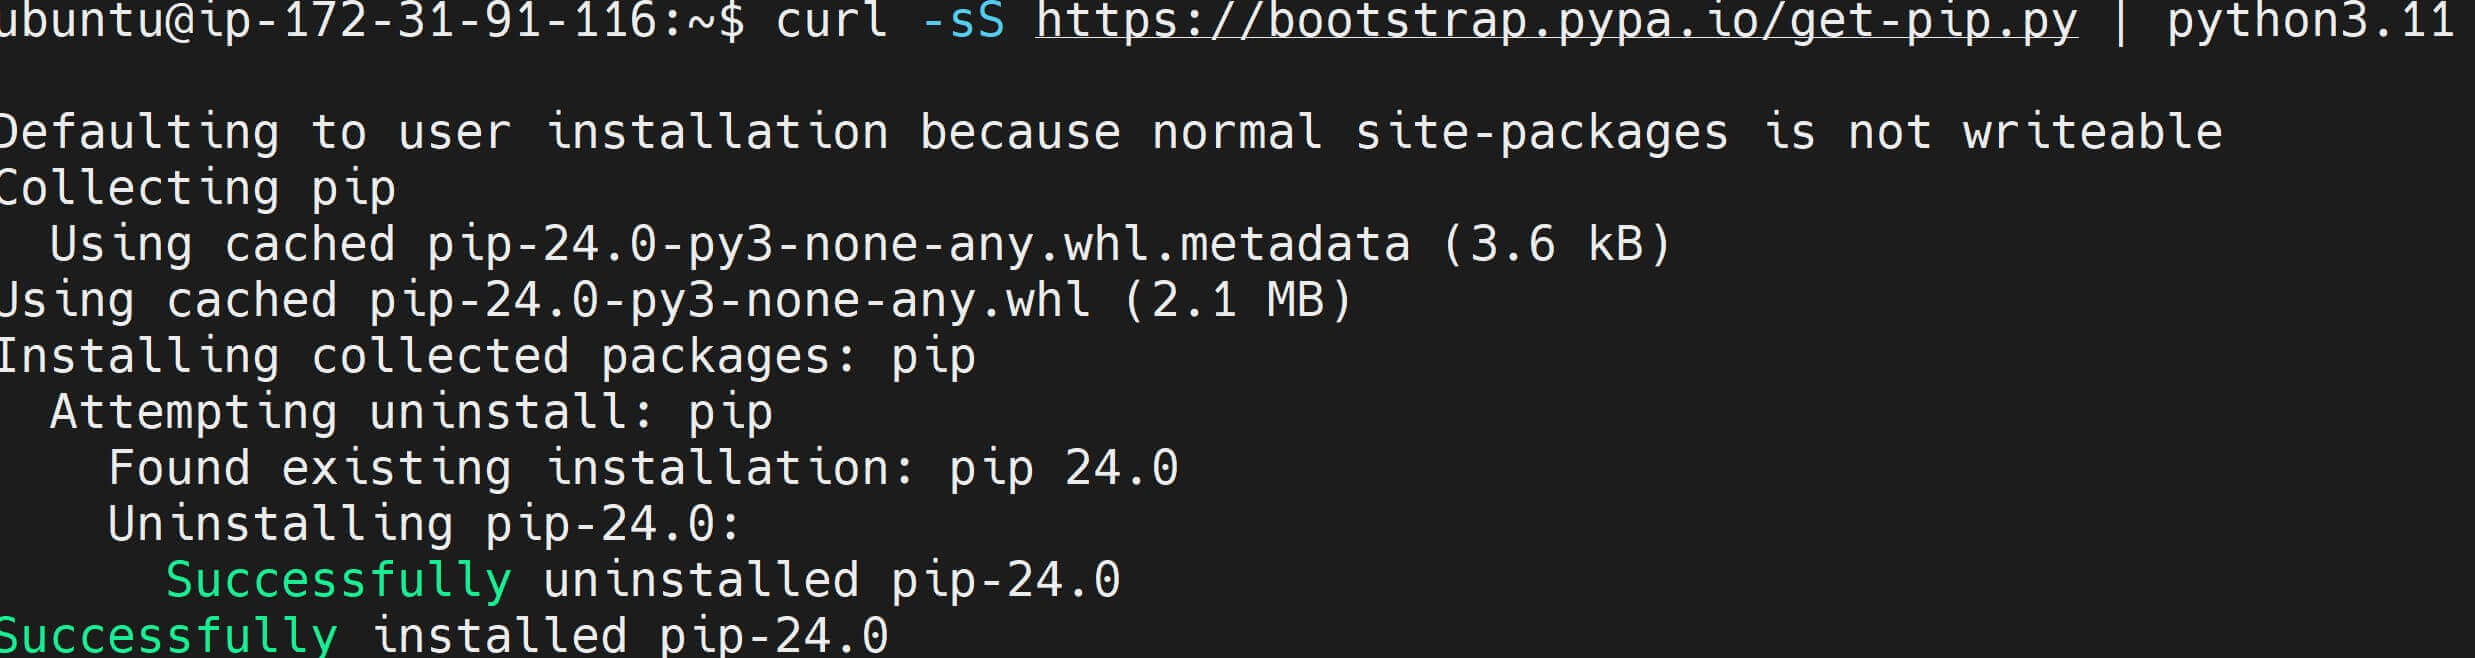 Getting Python 3.11 on Ubuntu 22.04|20.04